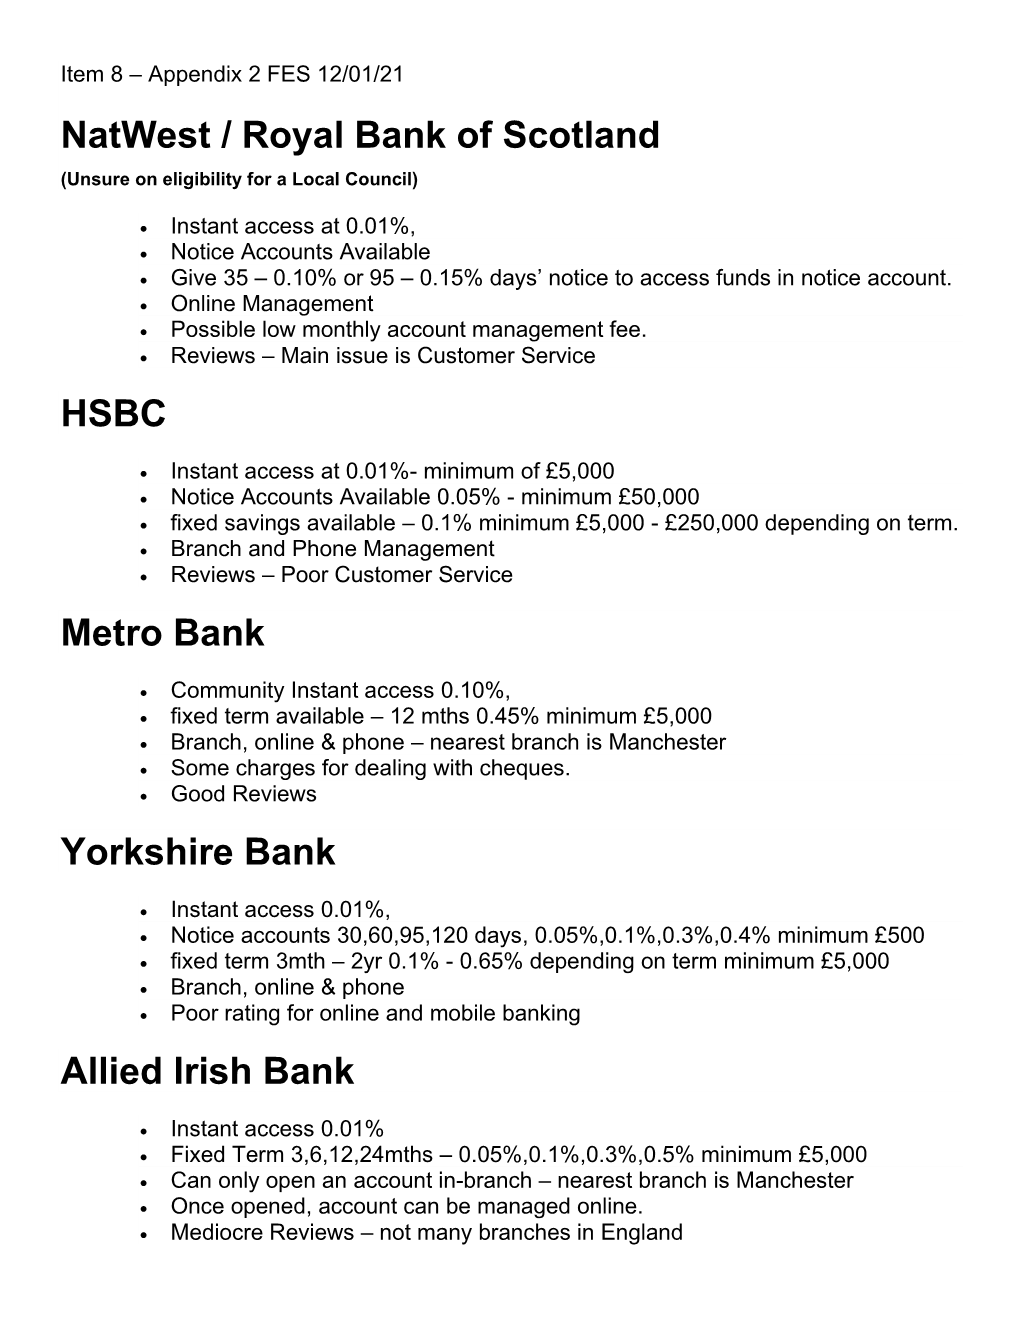 Natwest / Royal Bank of Scotland HSBC Metro Bank Yorkshire Bank